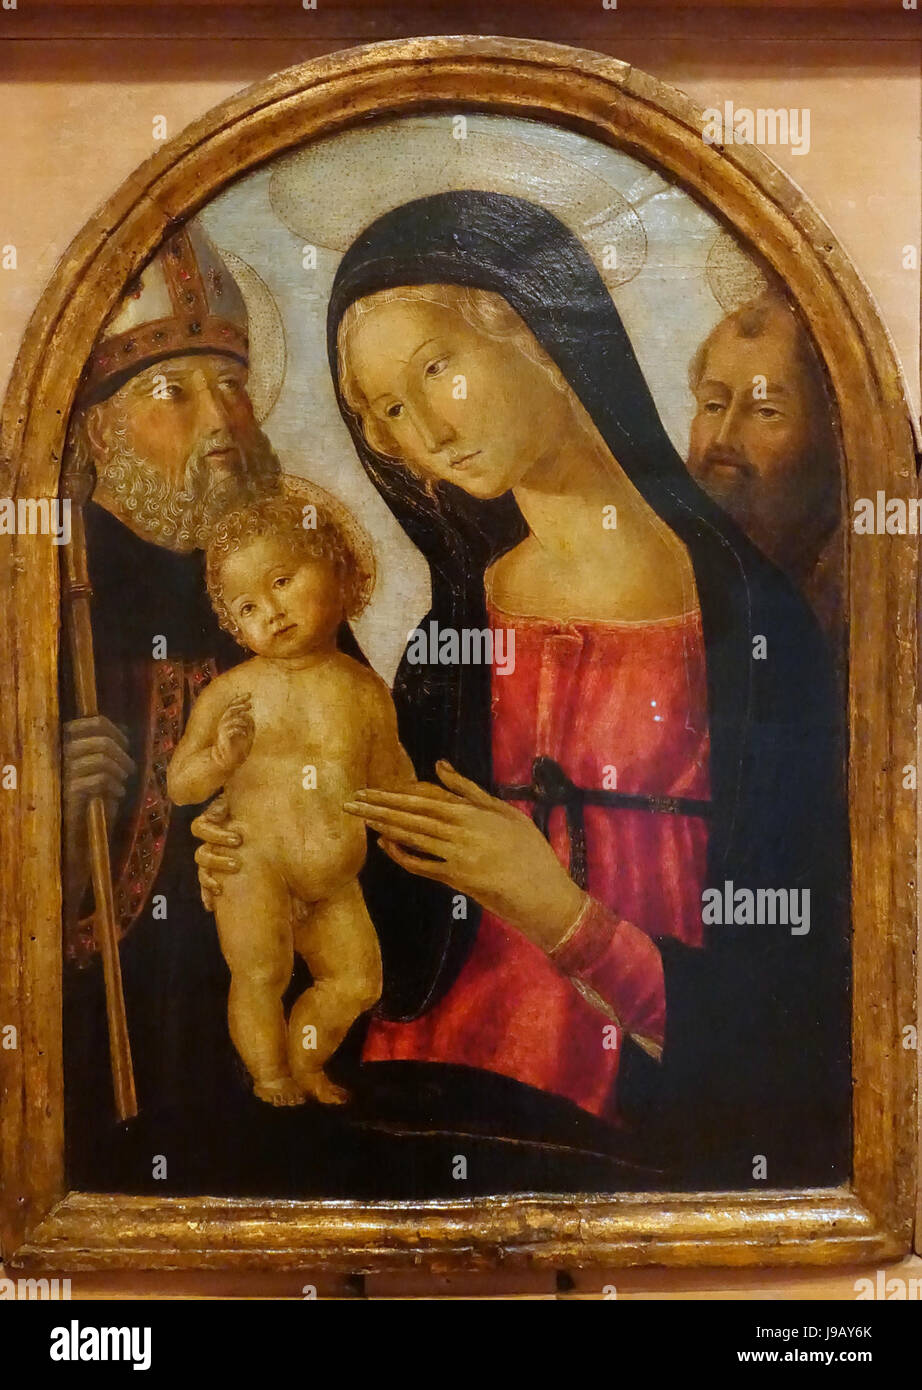 The Virgin and Child with Saints Augustine and Francis, workshop of Neroccio di Bartolomeo de' Landi, c. 1496, oil and tempera on panel   Krannert Art Museum, UIUC   DSC06363 Stock Photo